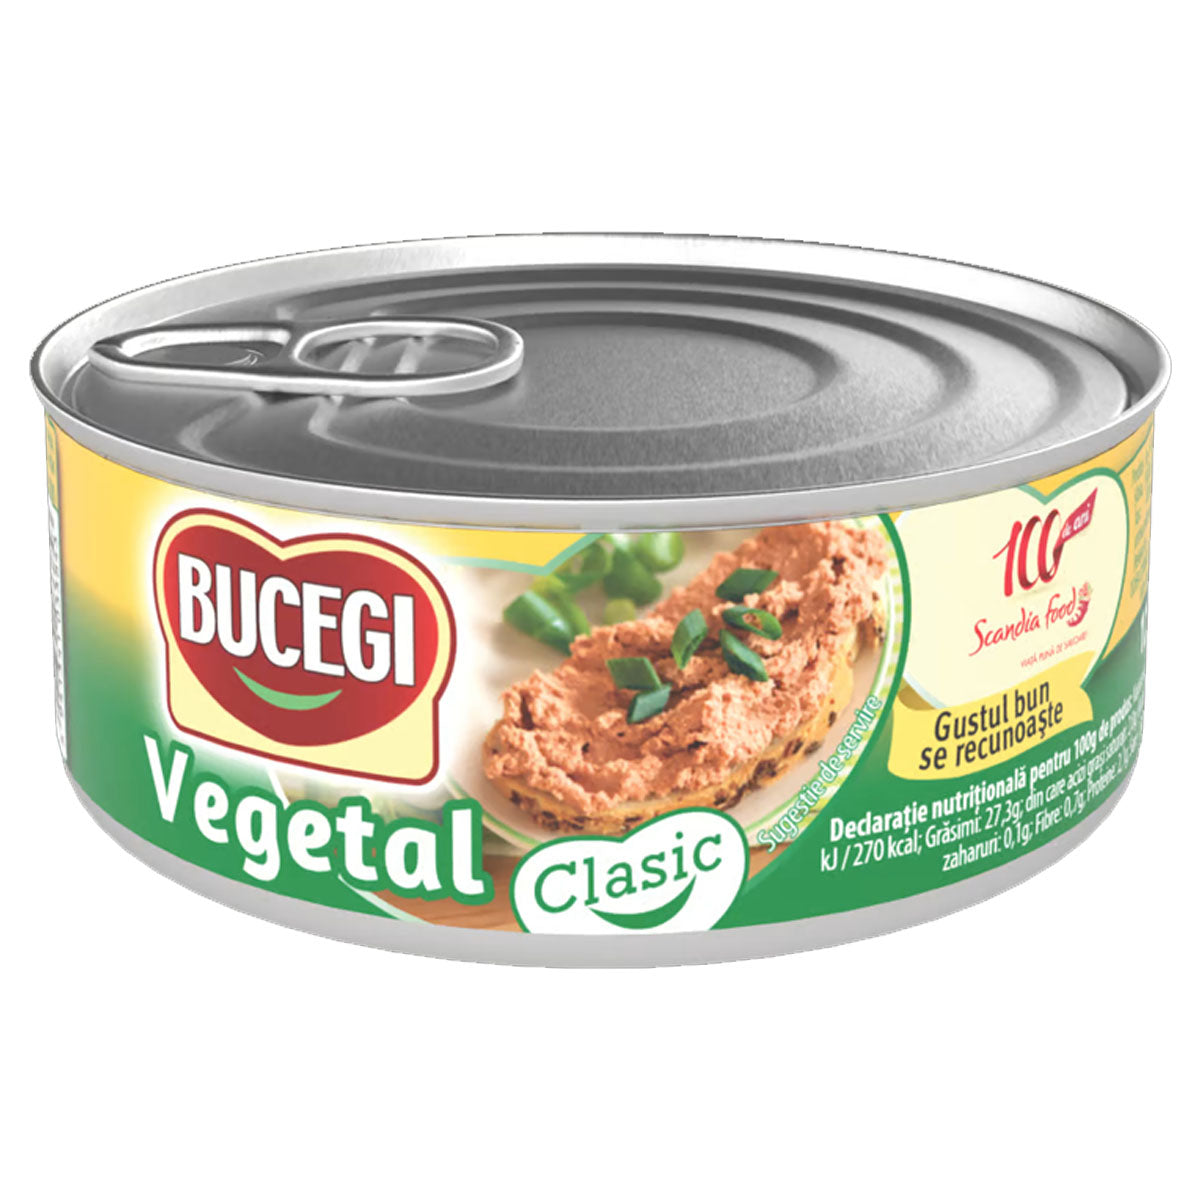 A can of Bucegi - Vegetable Pate (Vegetal Clasic) - 120g by Bucegi.